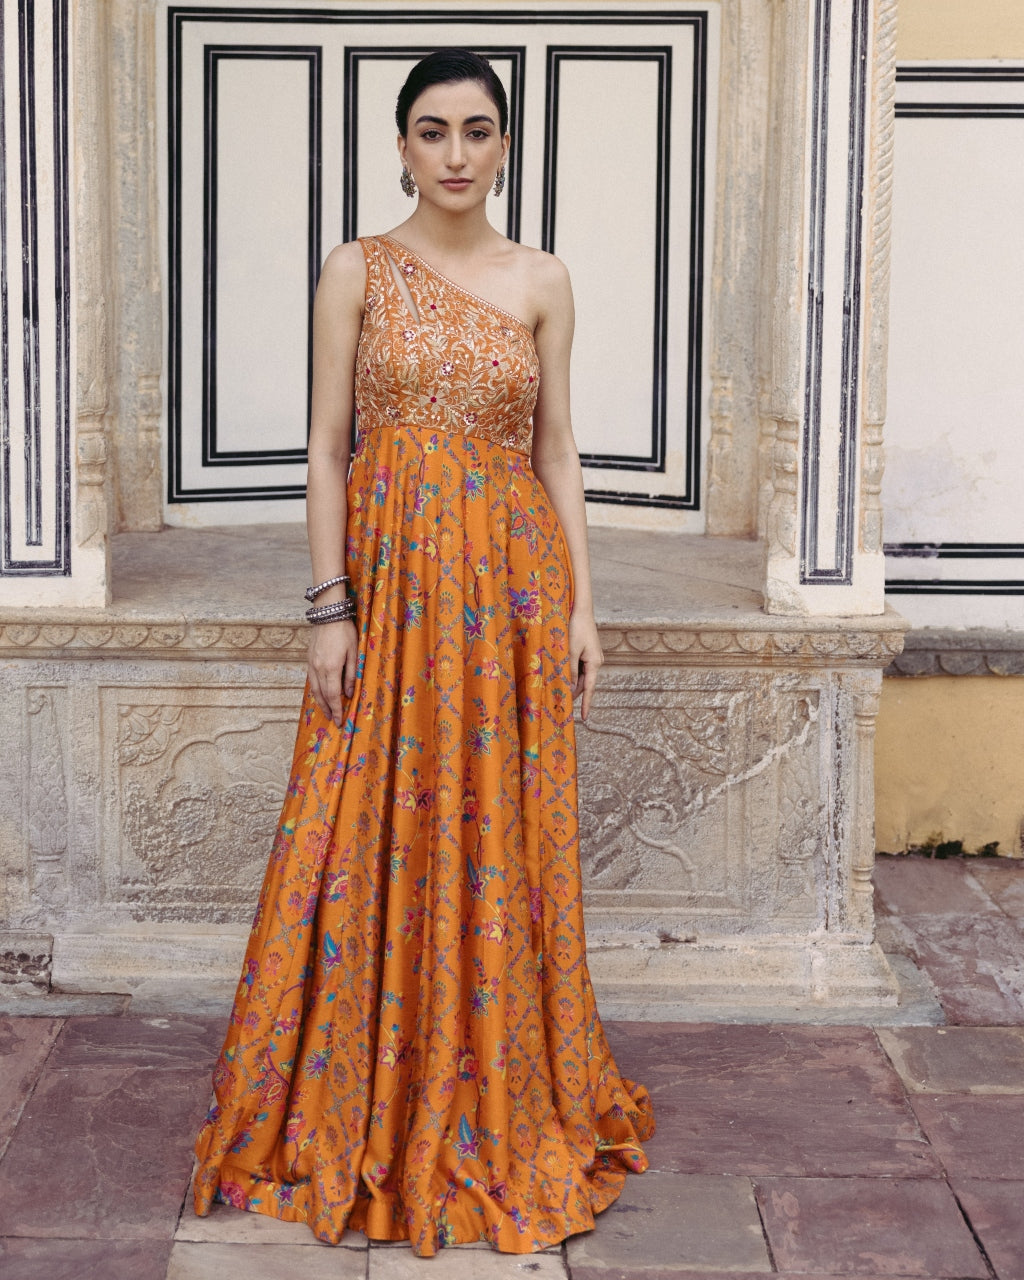 Tangerine Maxi Dress